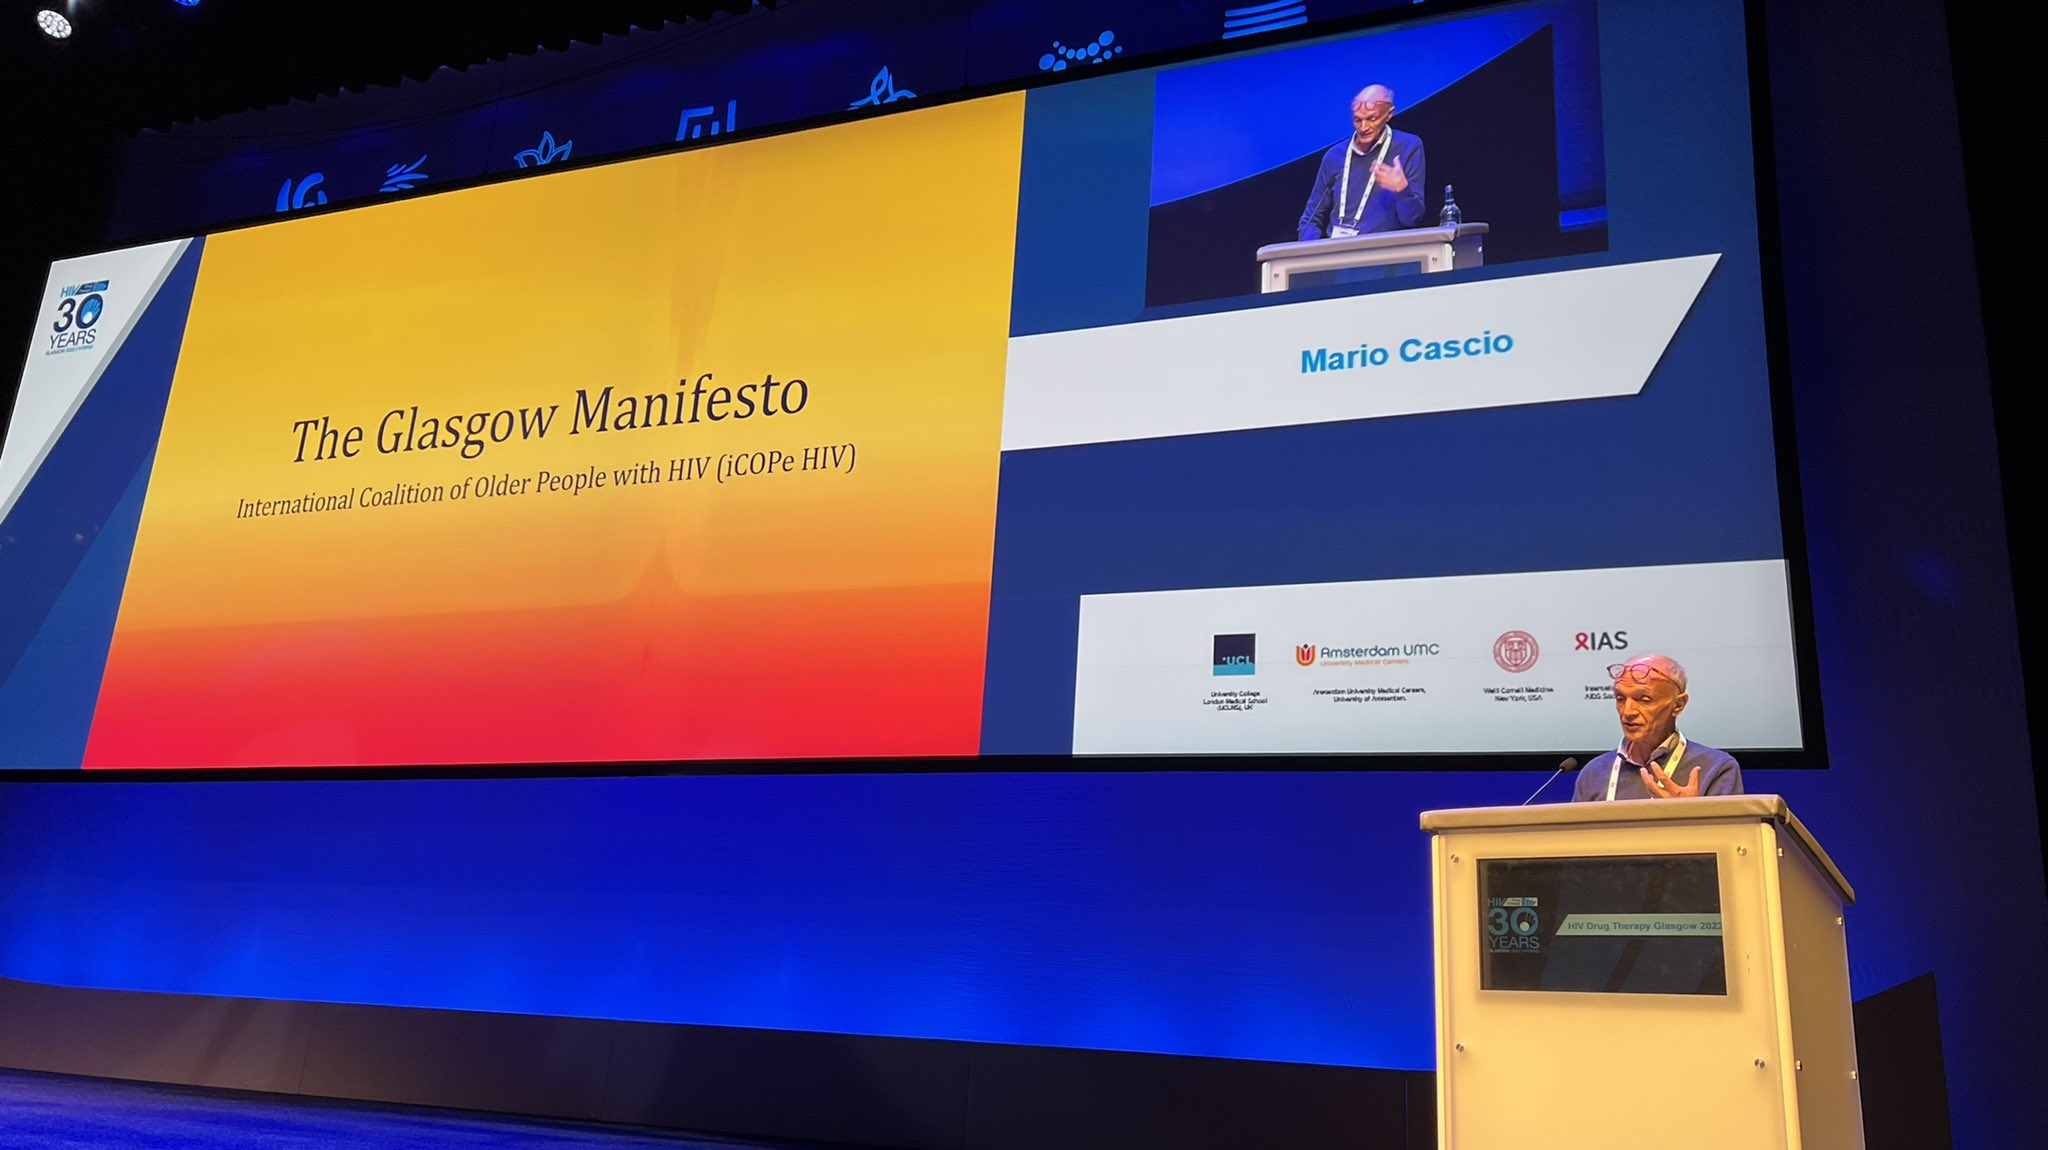 Realize partner, Mario Cascio of the European AIDS Treatment Group (EATG) presents the Glasgow Manifesto on October 26, 2022